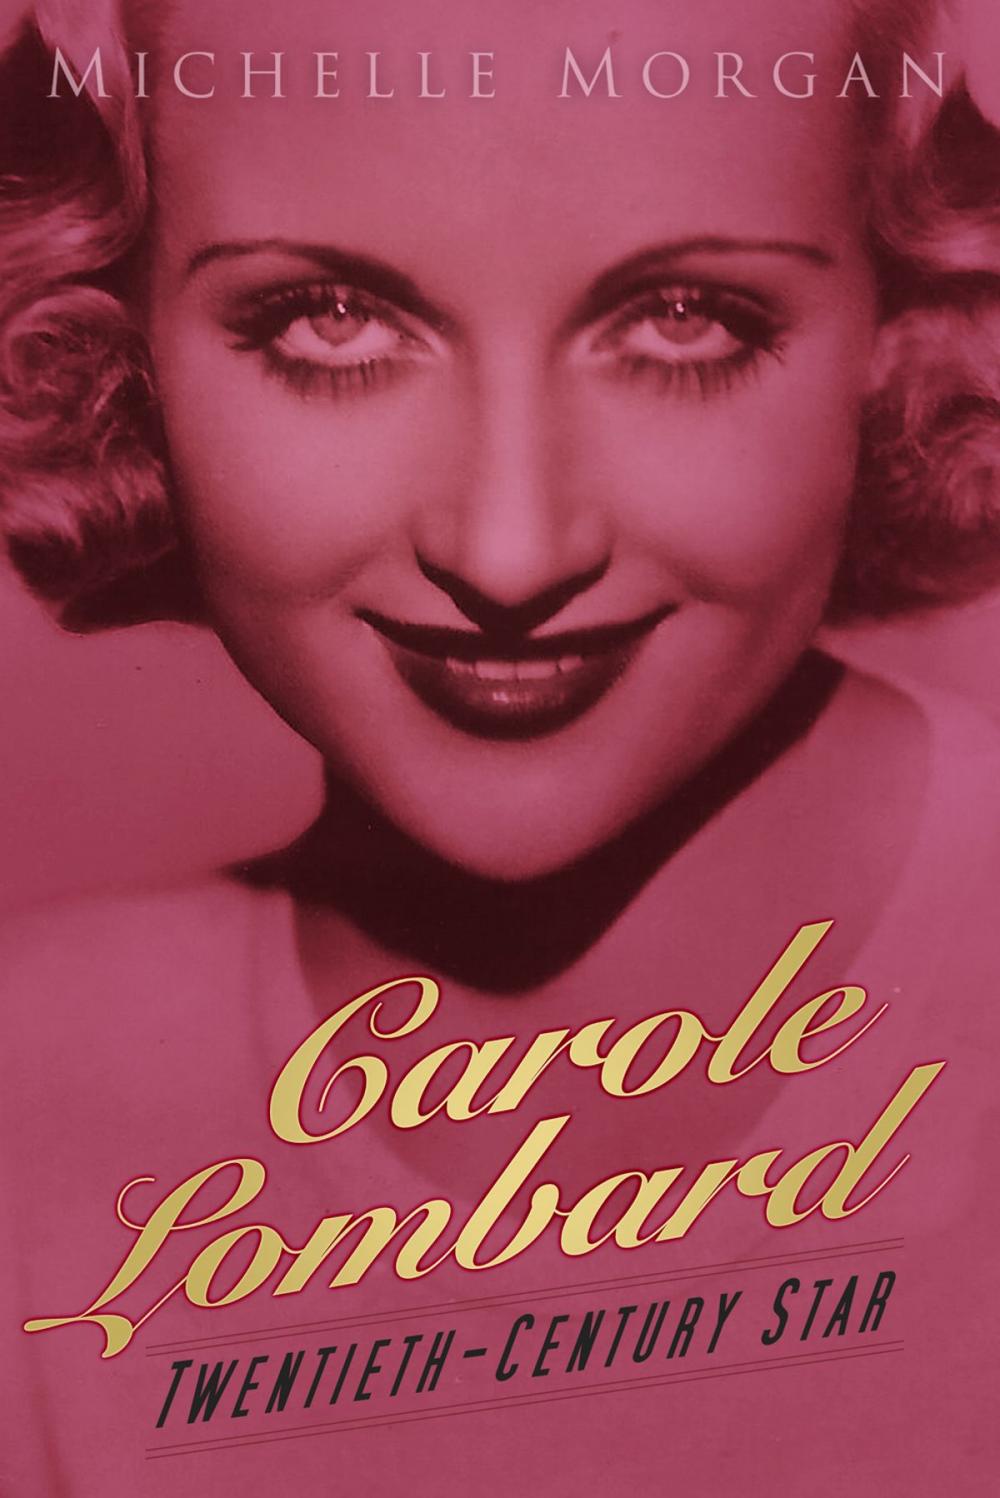 Big bigCover of Carole Lombard